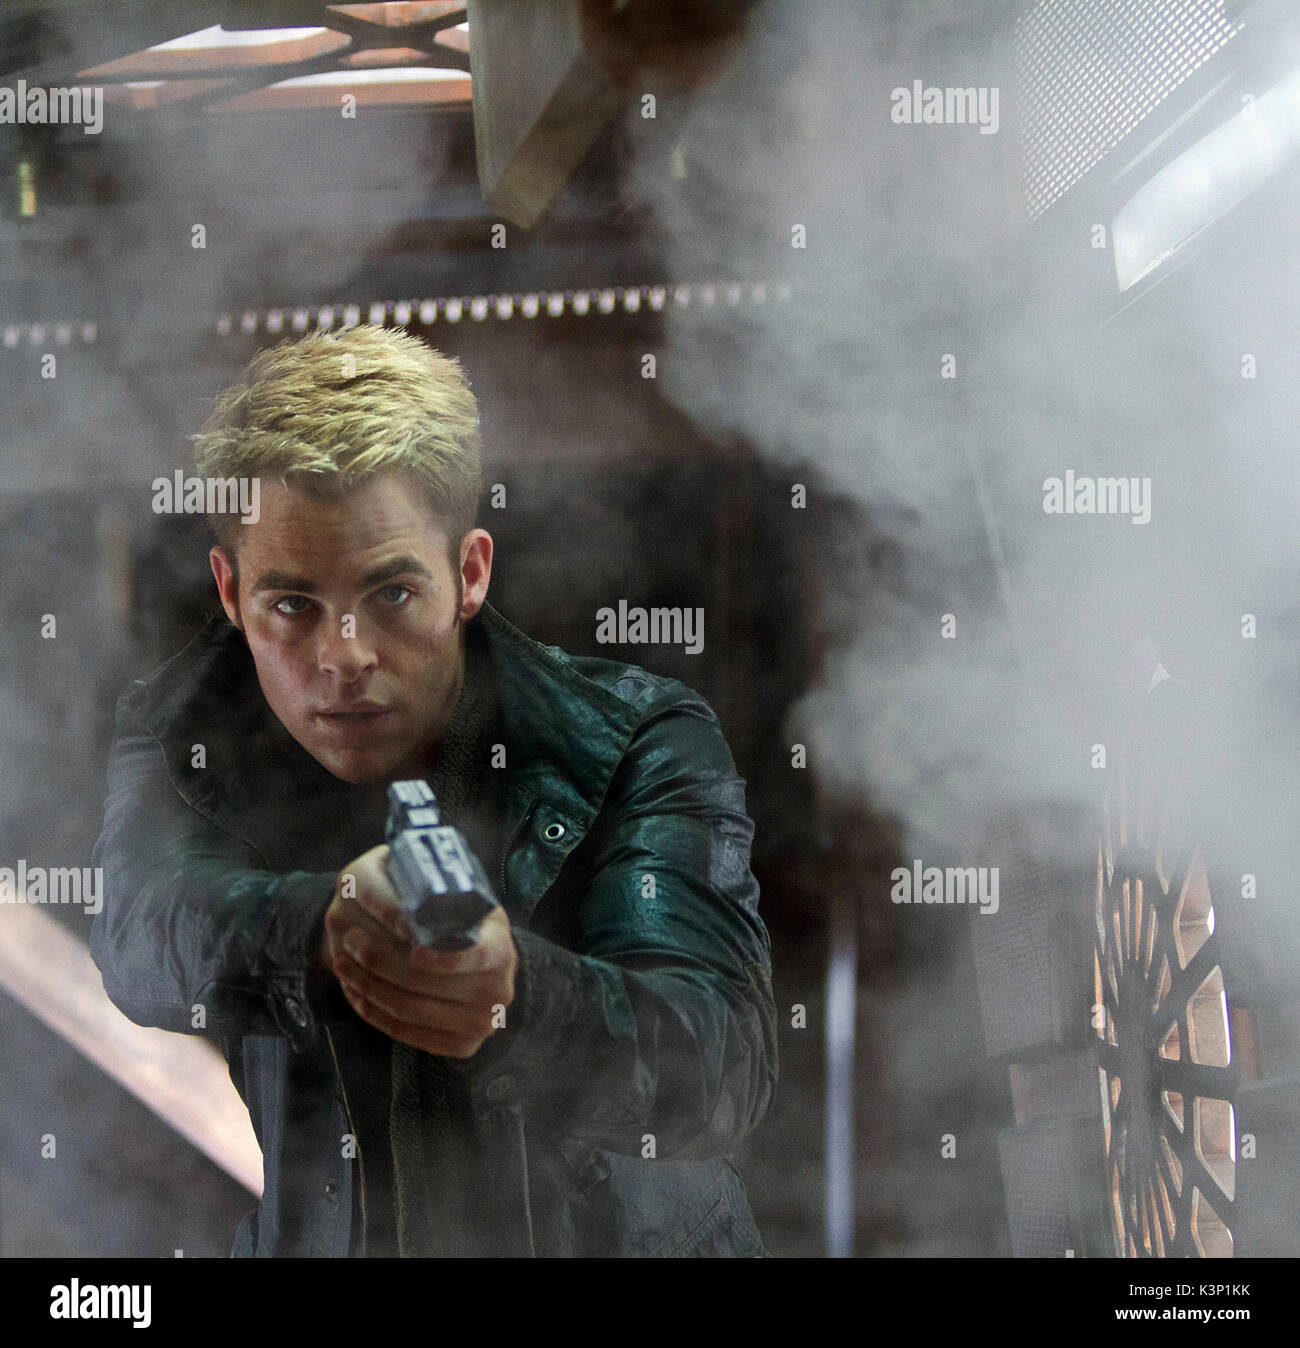 STAR TREK INTO DARKNESS [US 2013] CHRIS PINE as Captain James T. Kirk     Date: 2013 Stock Photo